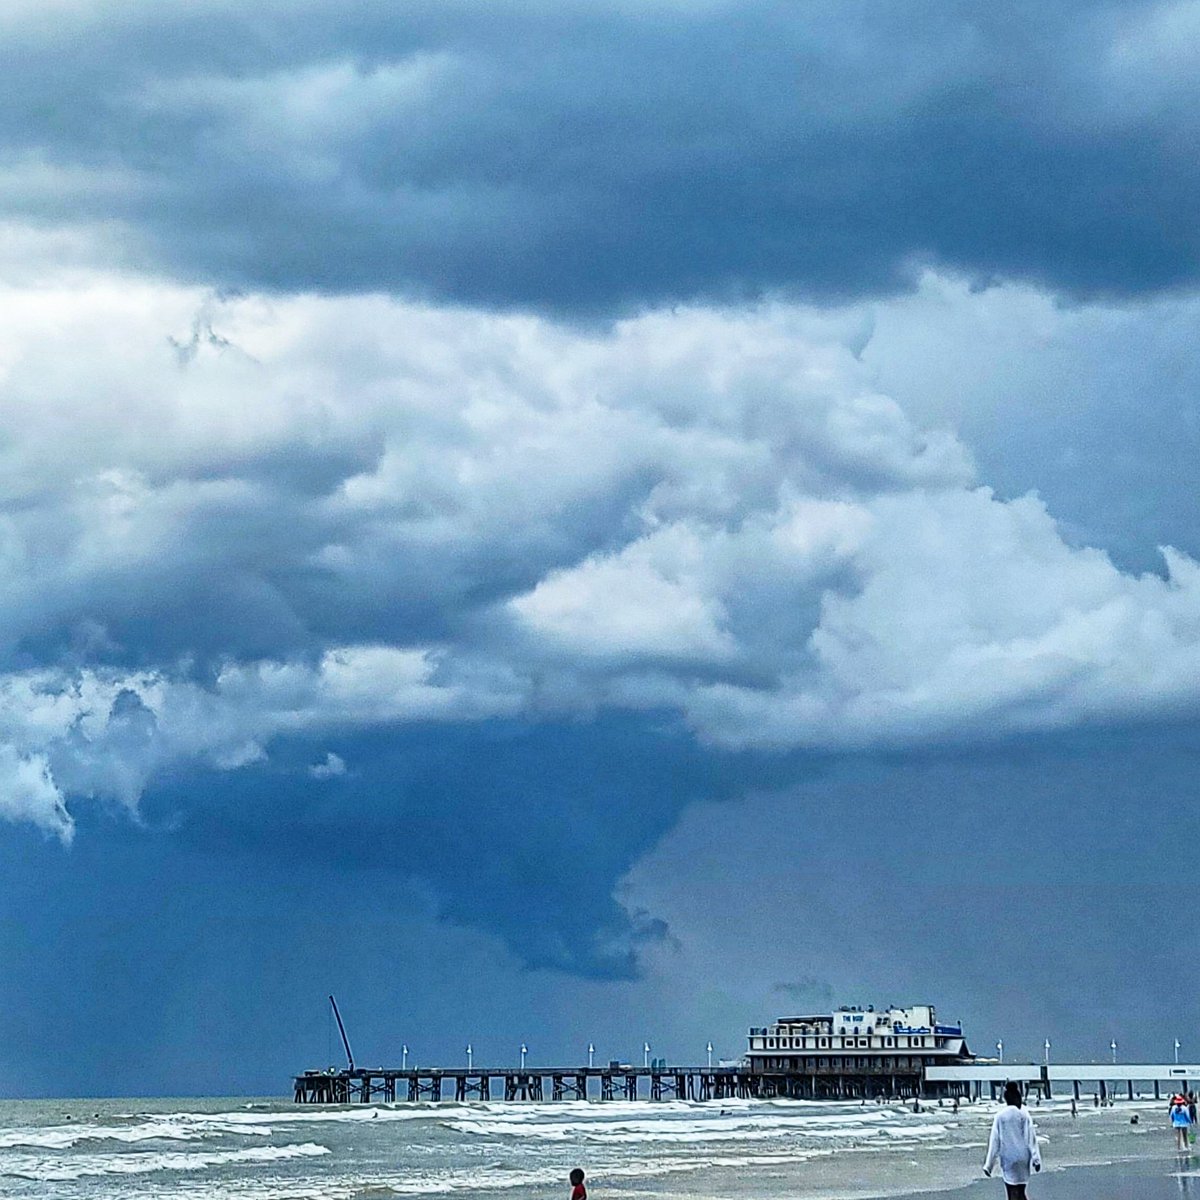 Clouds over Daytona Beach Florida this afternoon. @AndrewWMBF @brobwx @cameronwymt @ChrisHallWx @cjwxguy56 @JimWKYT @jloganwxguy @Kentuckyweather @thekyniche @spann @wxchanneldesk